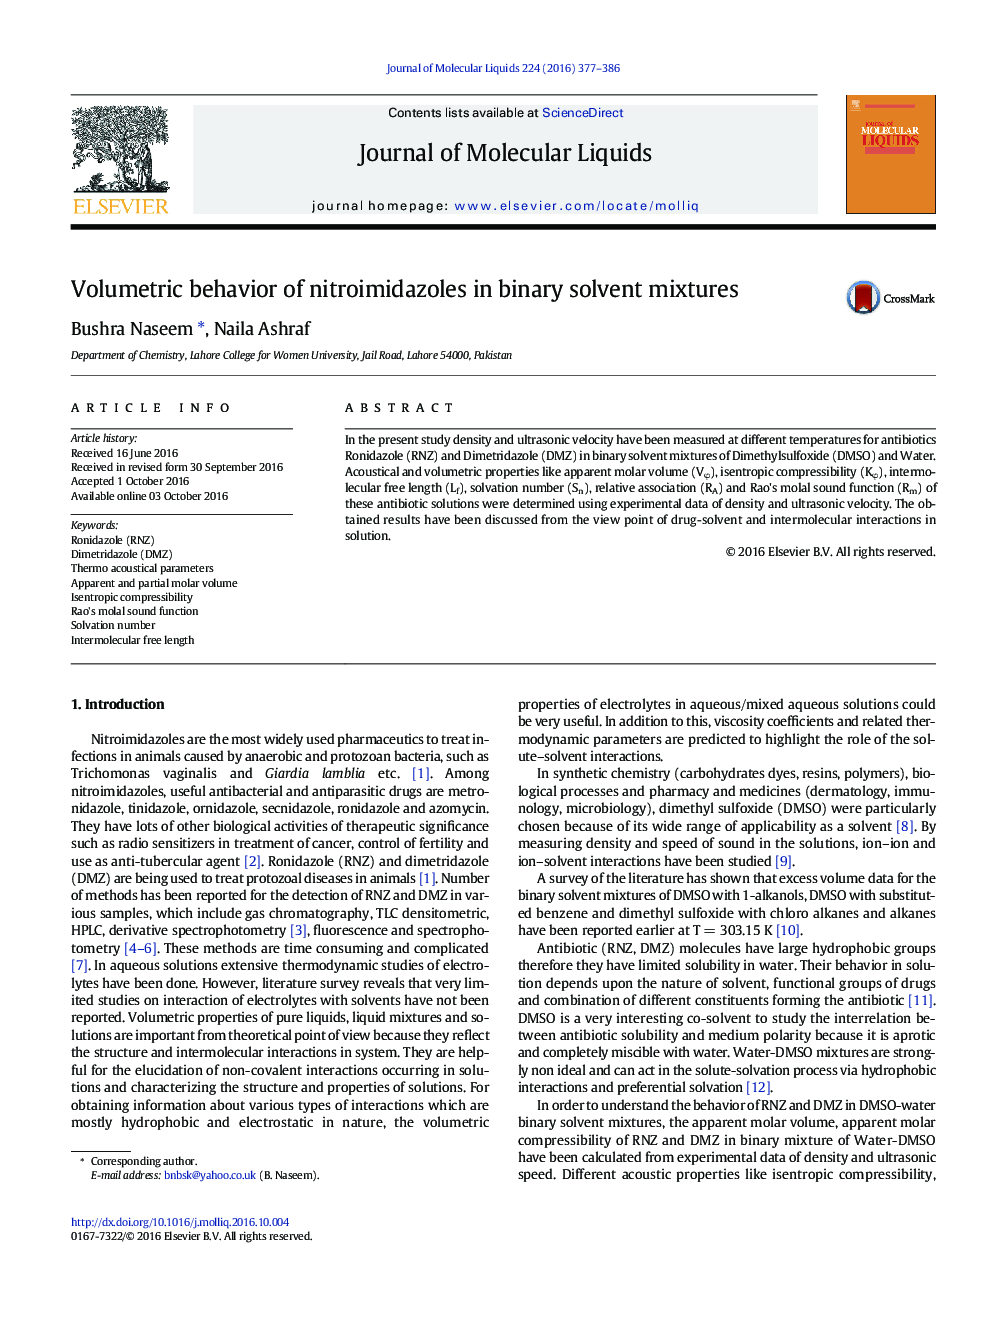 Volumetric behavior of nitroimidazoles in binary solvent mixtures